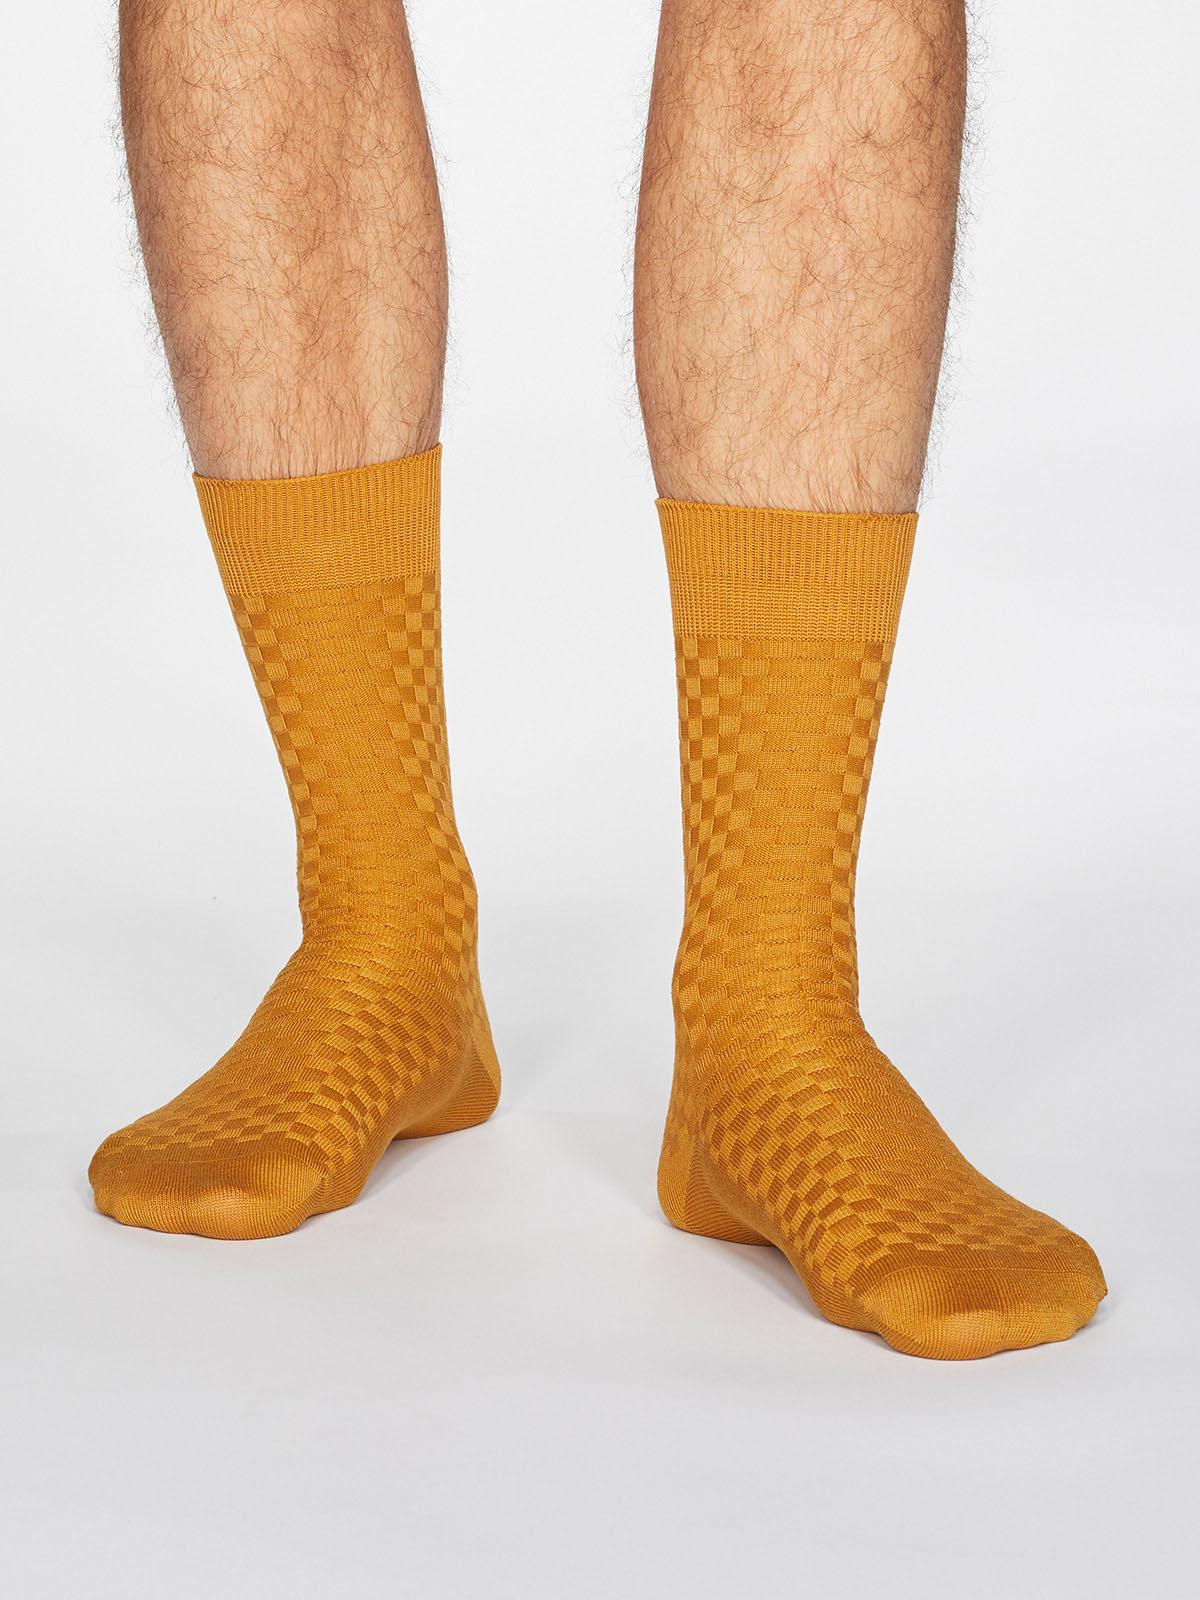 Cameron Organic Cotton Suit Socks - Mustard Yellow - Thought Clothing UK